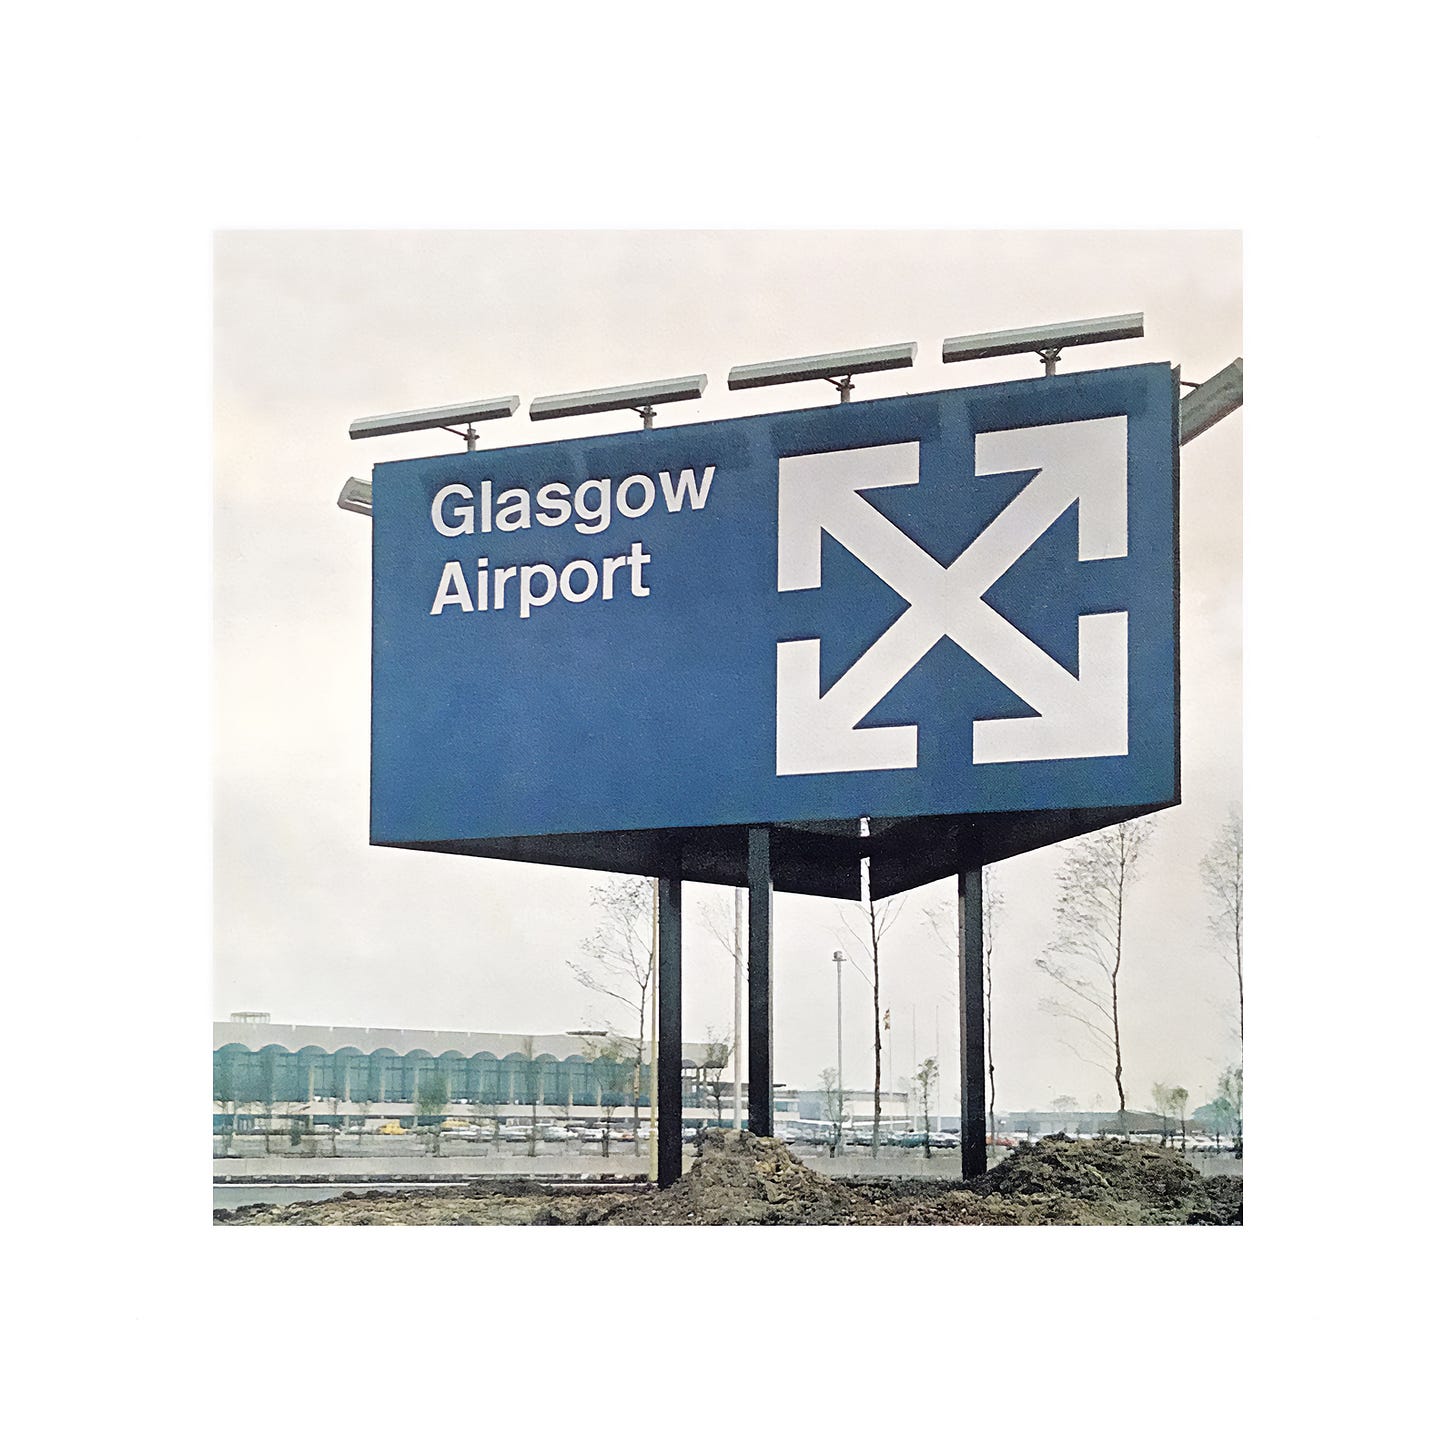 Margaret Calvert's 1964 logo for Glasgow Airport. Airport signage